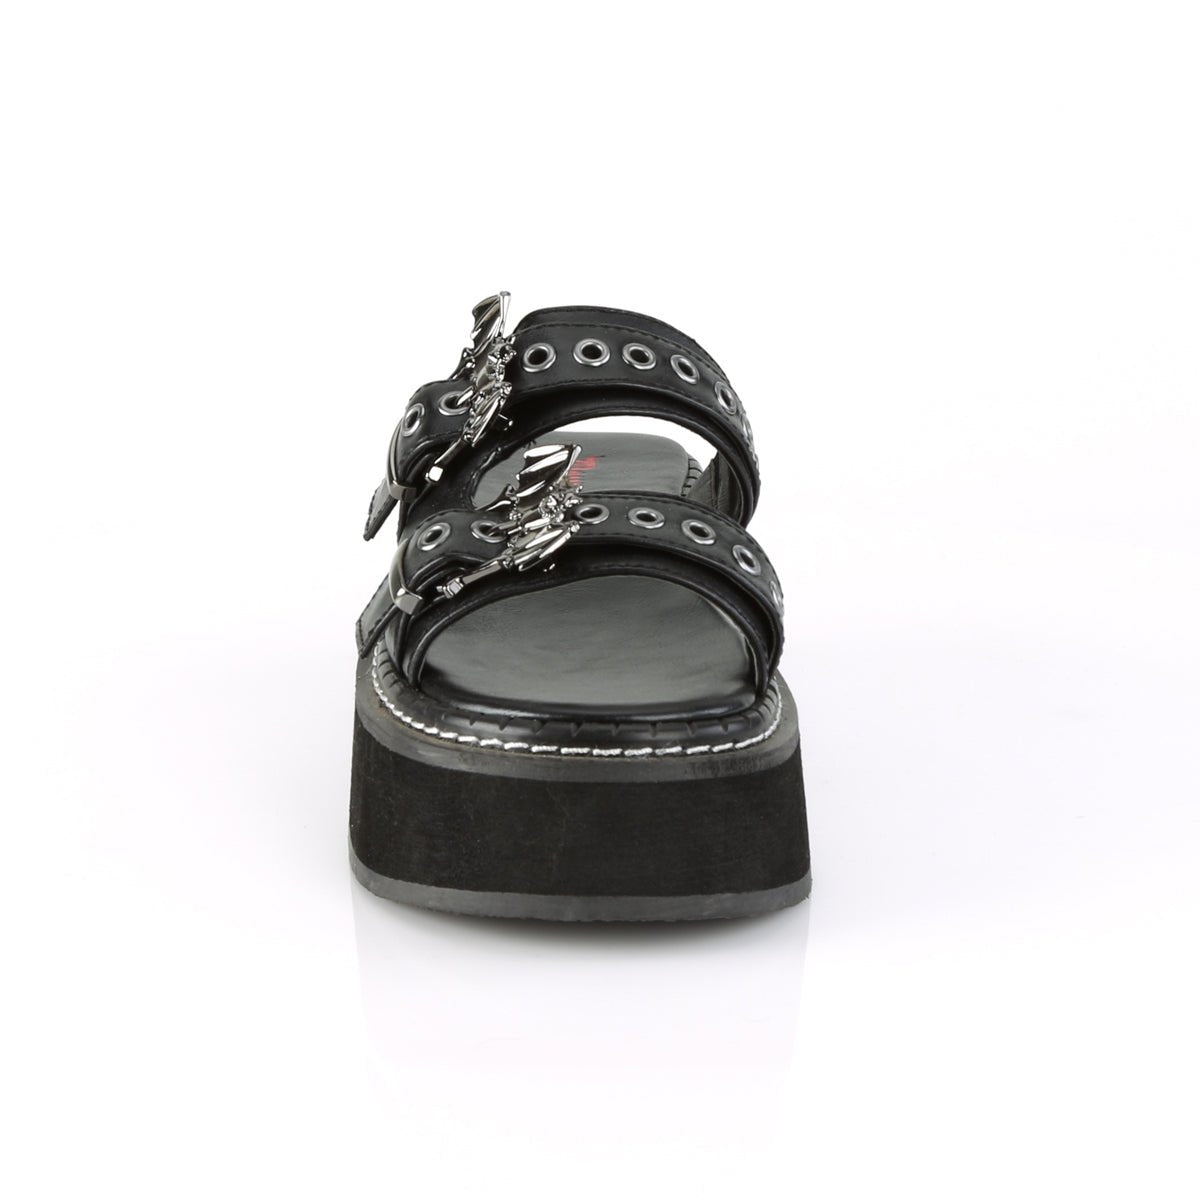 Too Fast | Demonia Emily 100 | Black Vegan Leather Women's Sandals